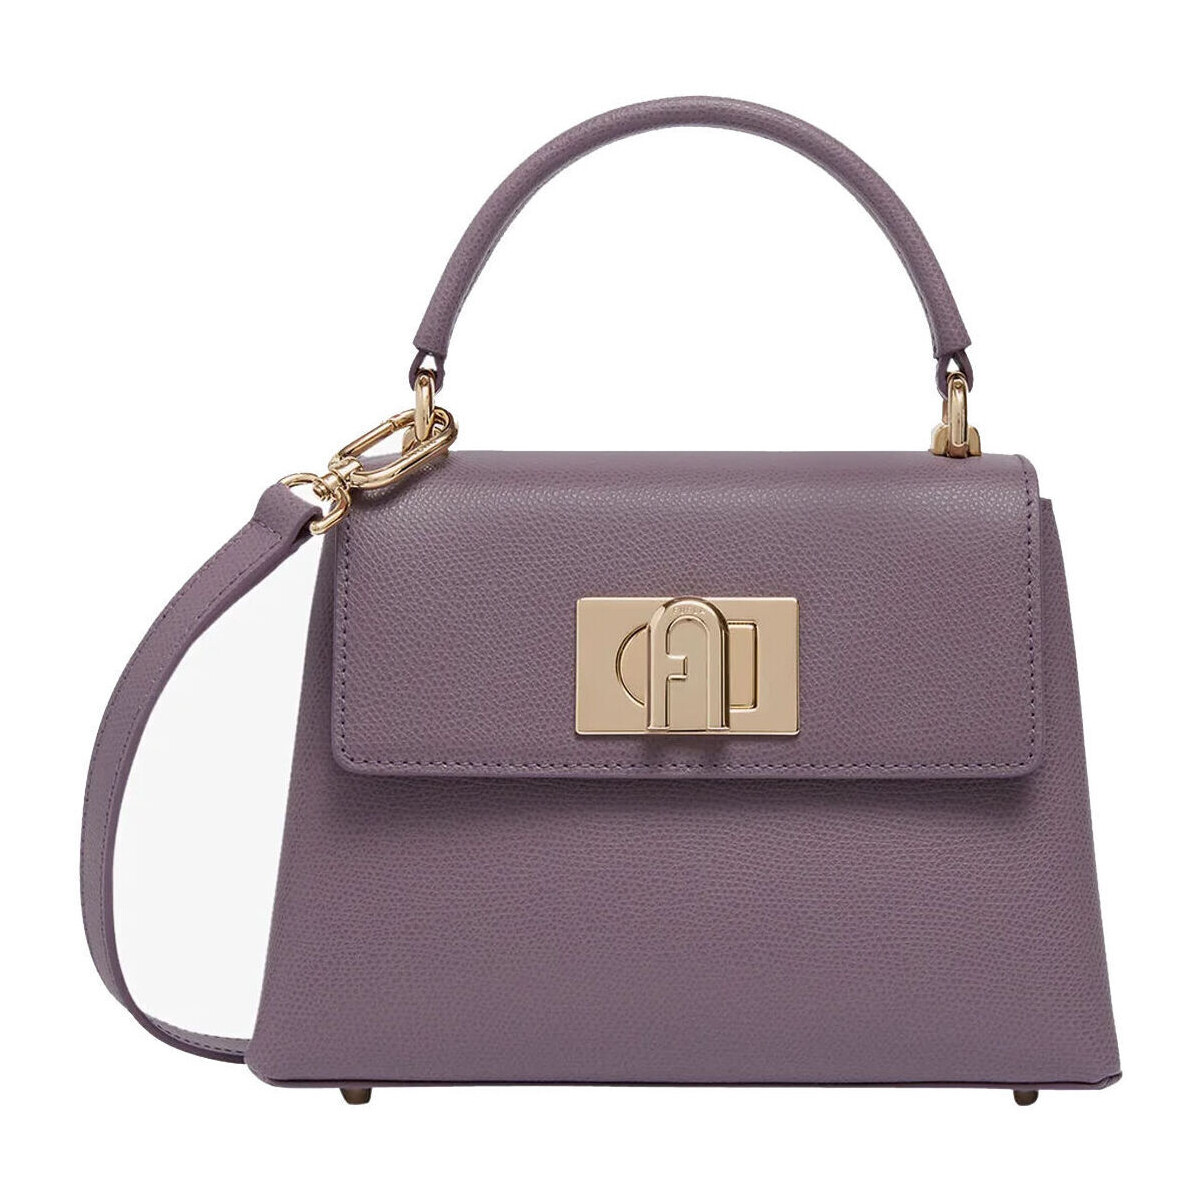 Taschen Damen Geldtasche / Handtasche Furla - furla1927_mini-top_ares Violett